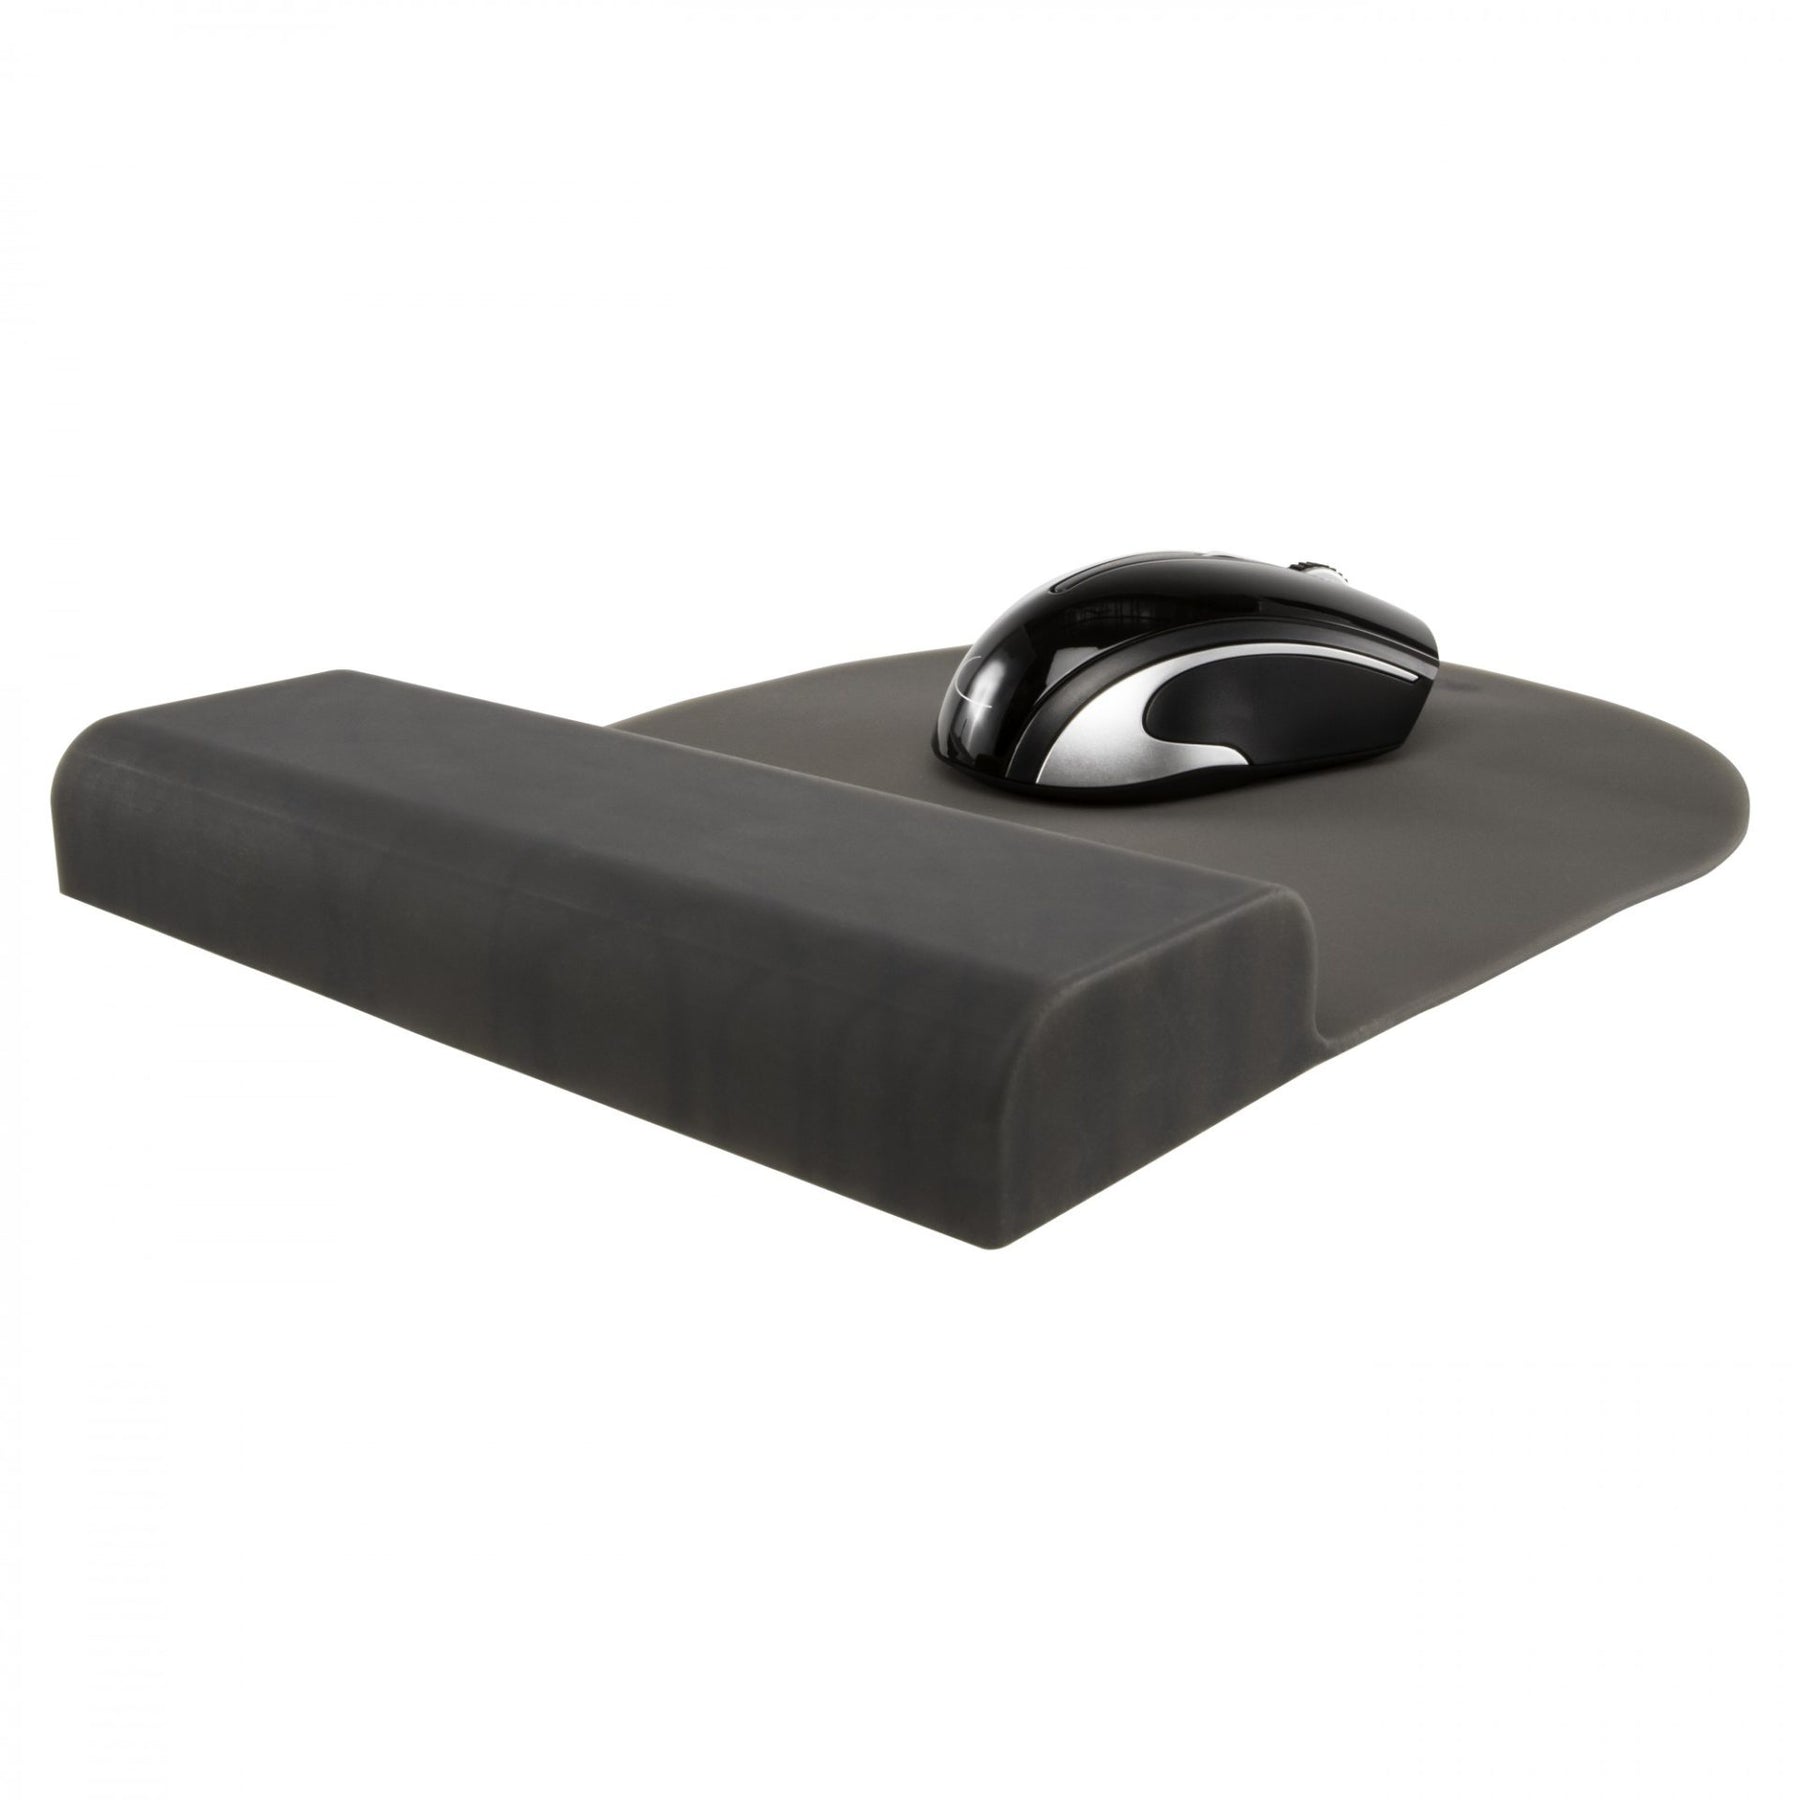 Allsop ComfortFoam Memory Foam Mouse Pad with Wrist Rest